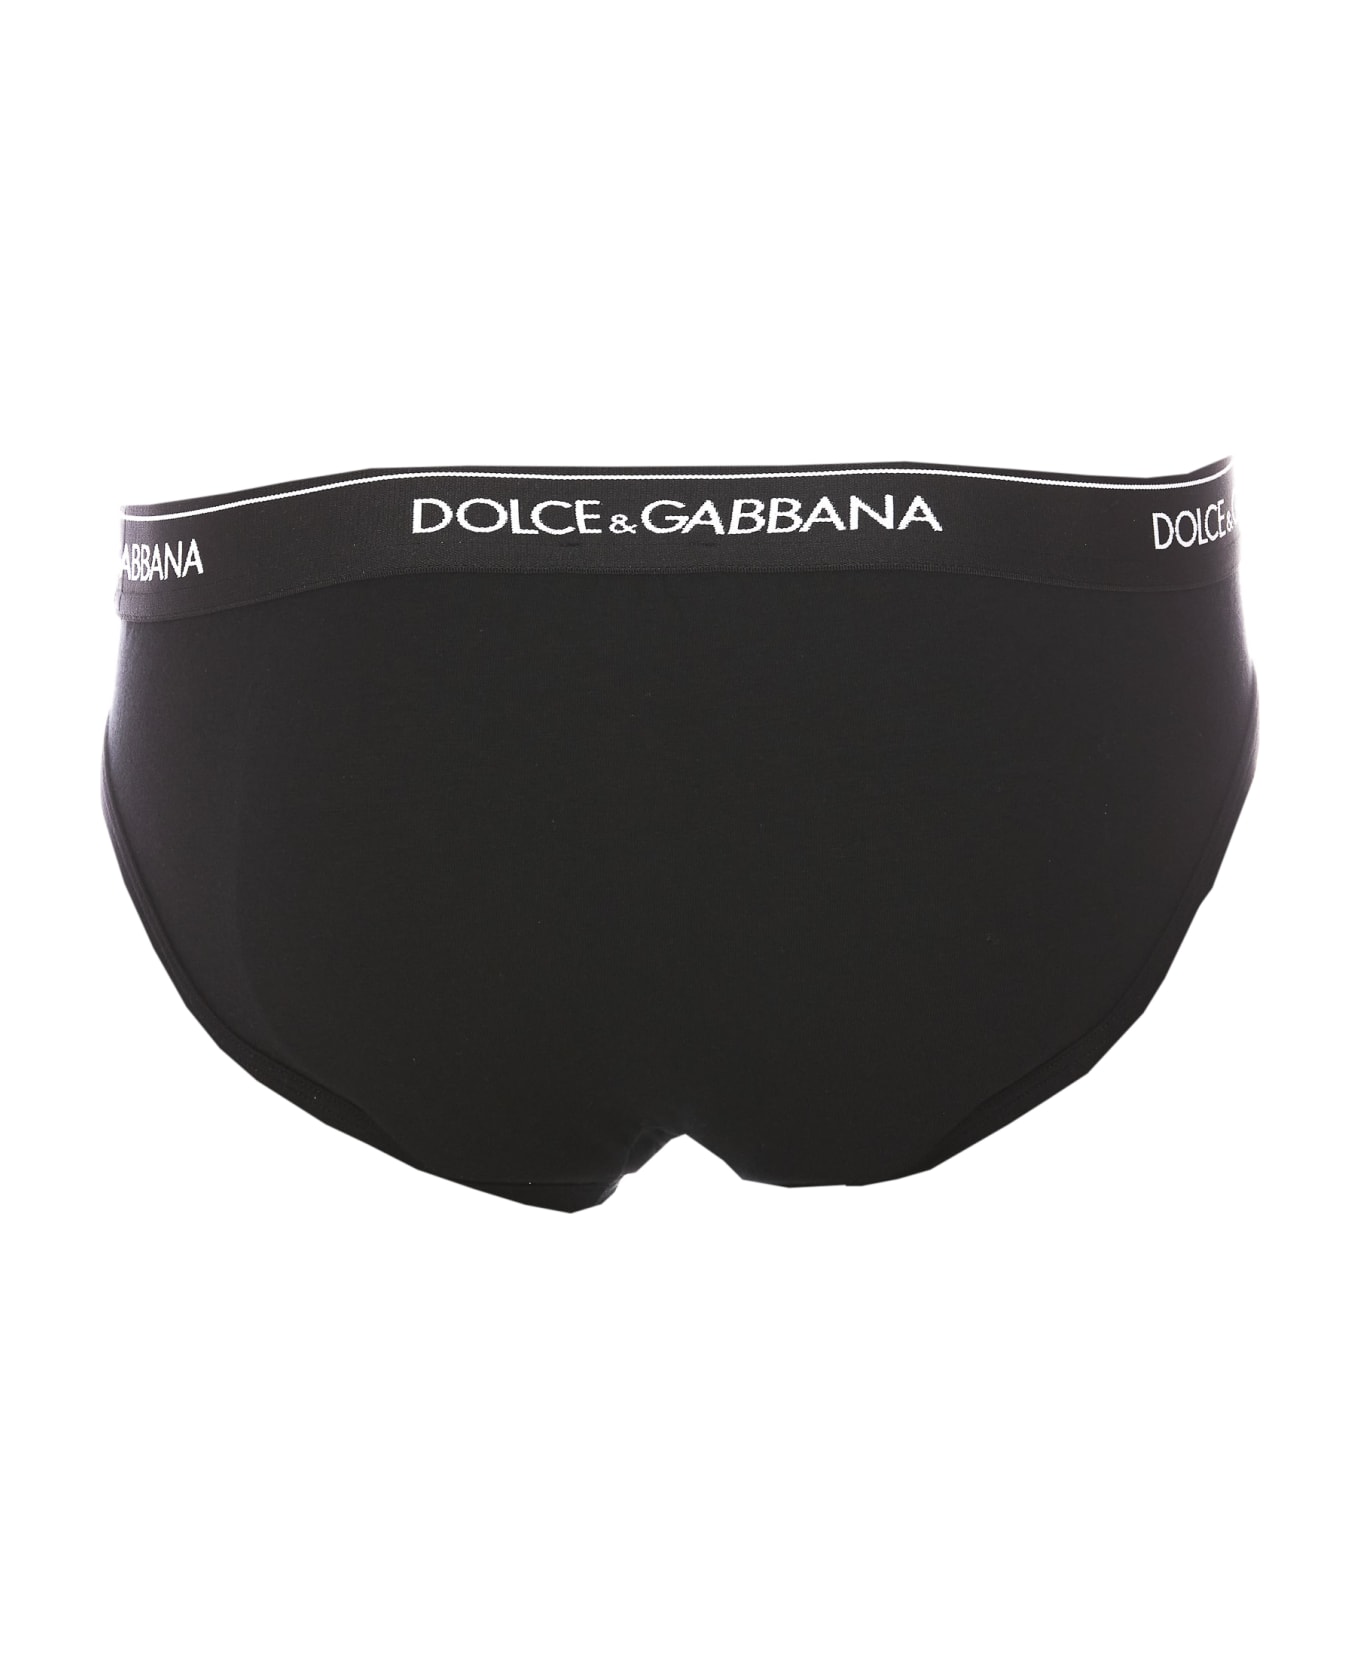 Dolce & Gabbana Logo Bipack Brief - BLACK